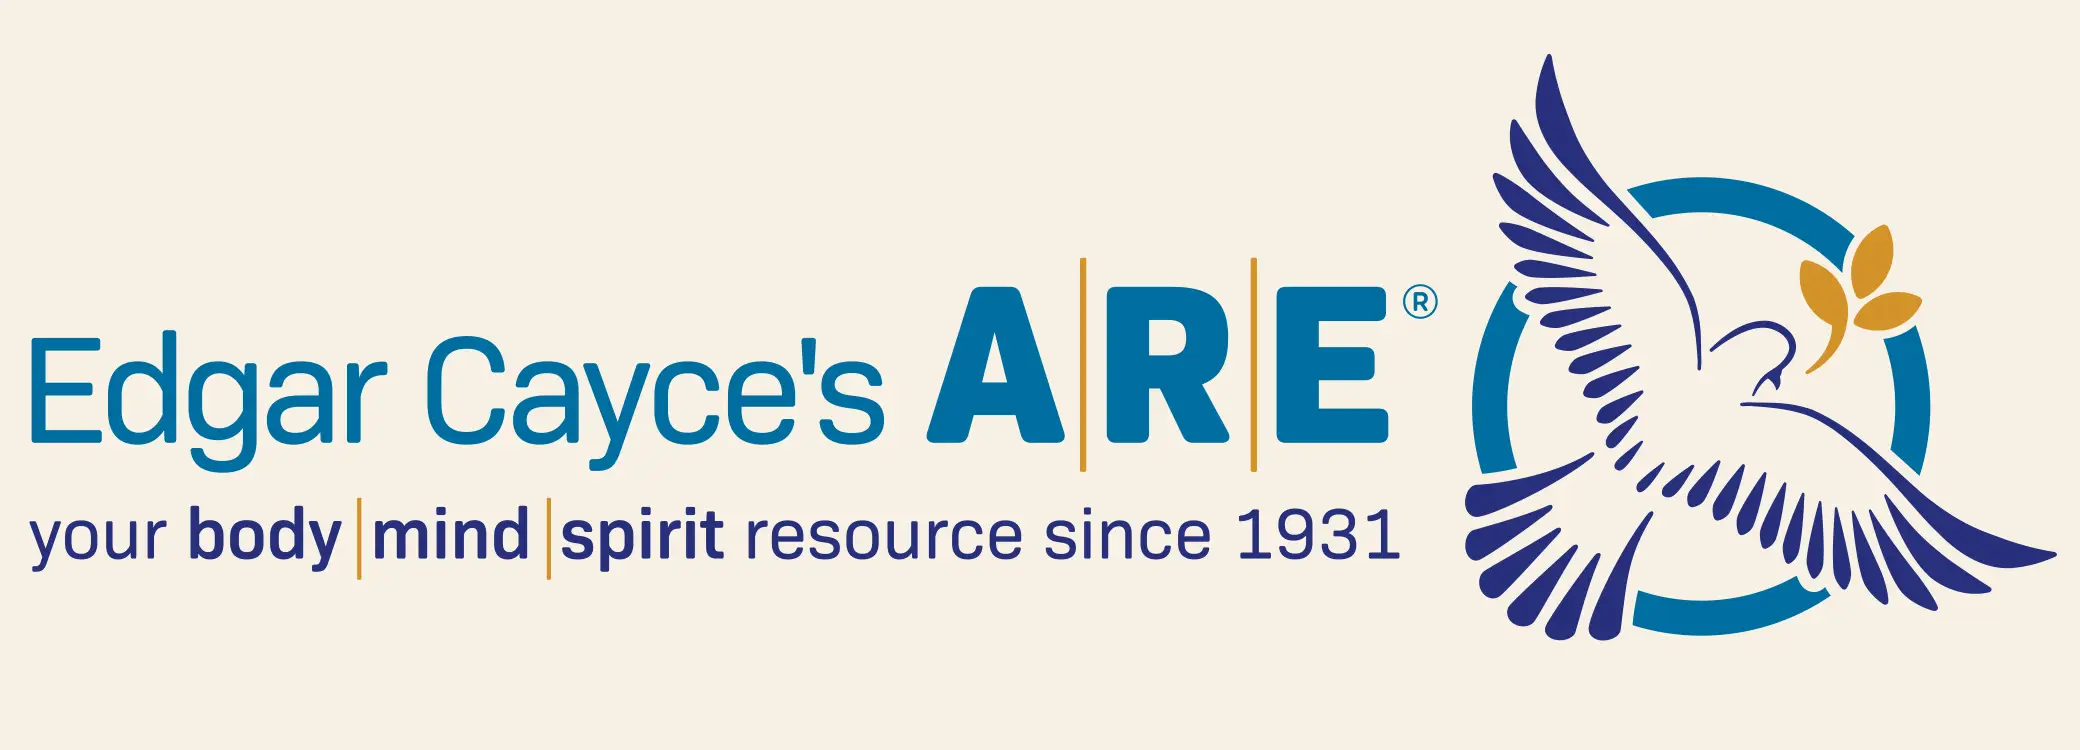 Edgar Cayce's A.R.E. new logo by Red Chalk Studios in Virginia Beach, VA